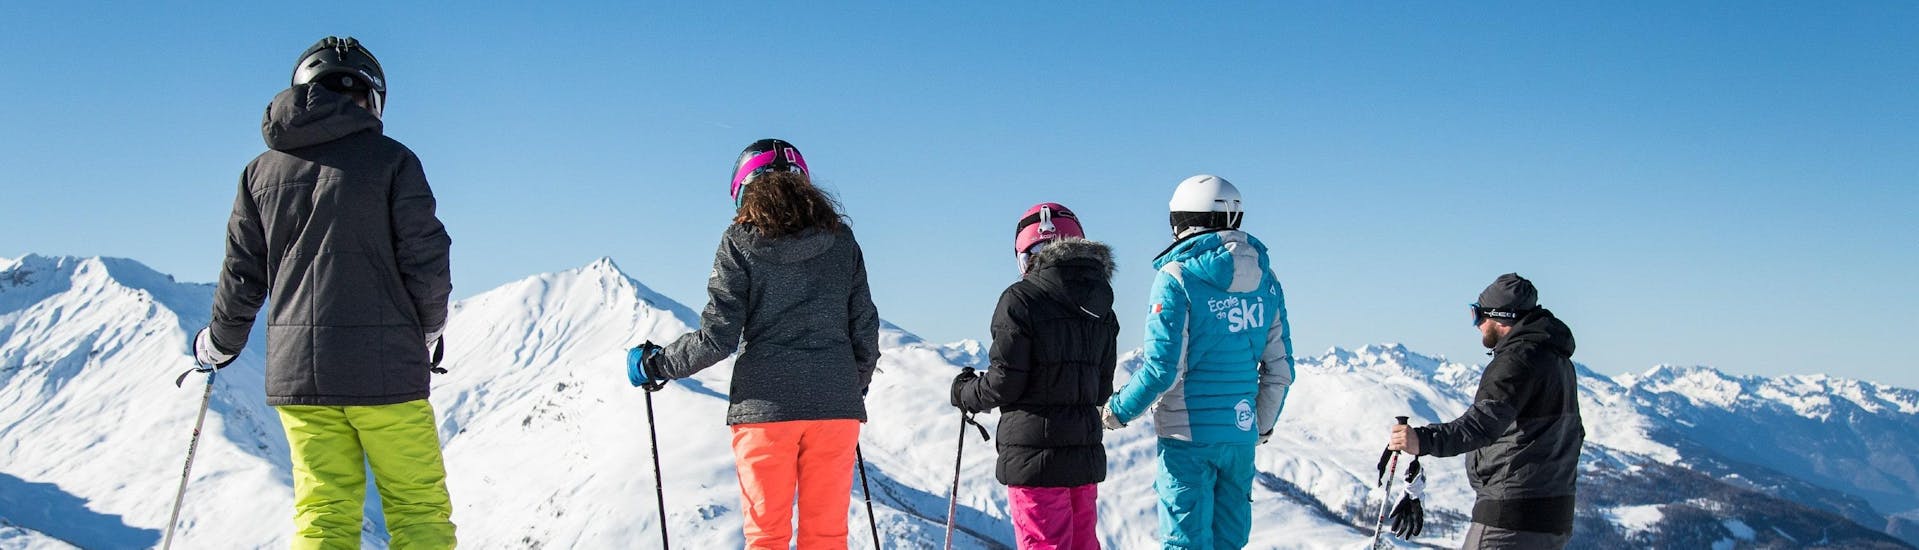 Clases de esquí para adultos a partir de 13 años para principiantes.